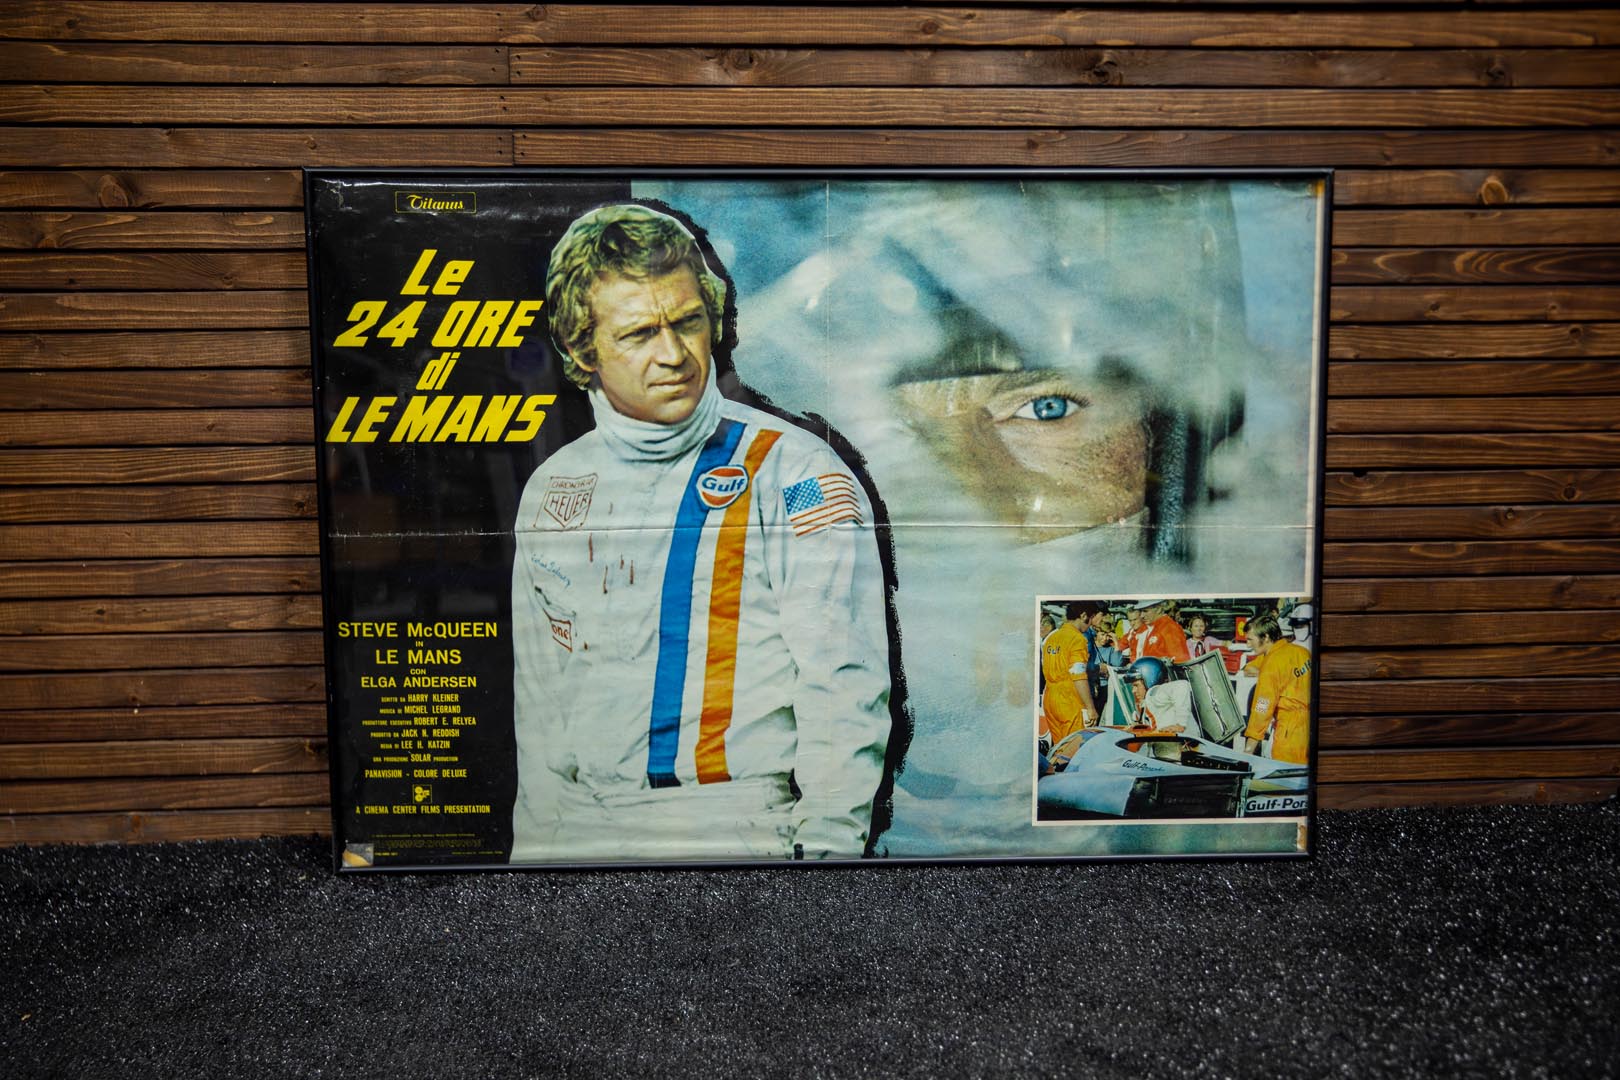  Le 24 Ore di Le Mans - Steve M cQueen Movie Poster - Framed 